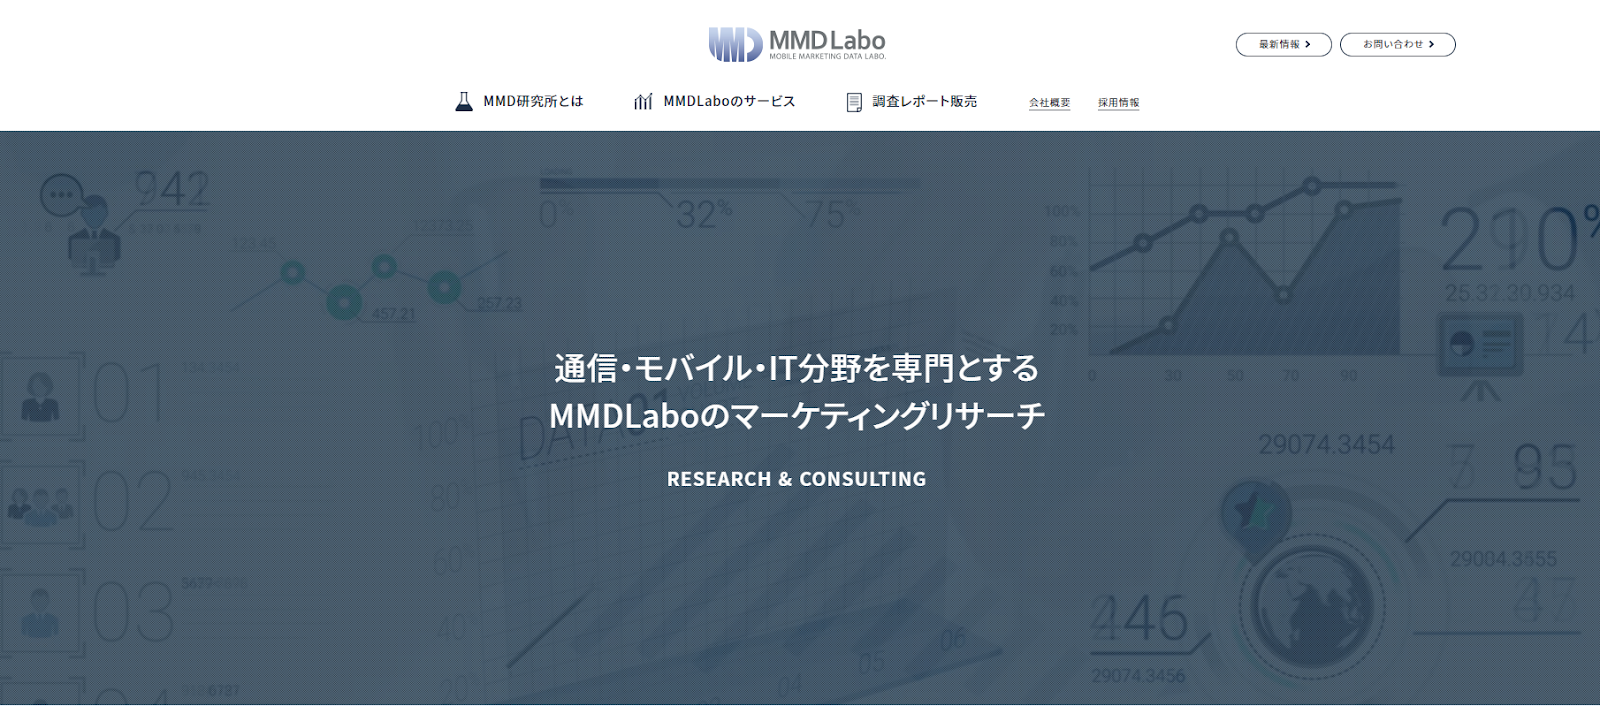 MMDLabo株式会社